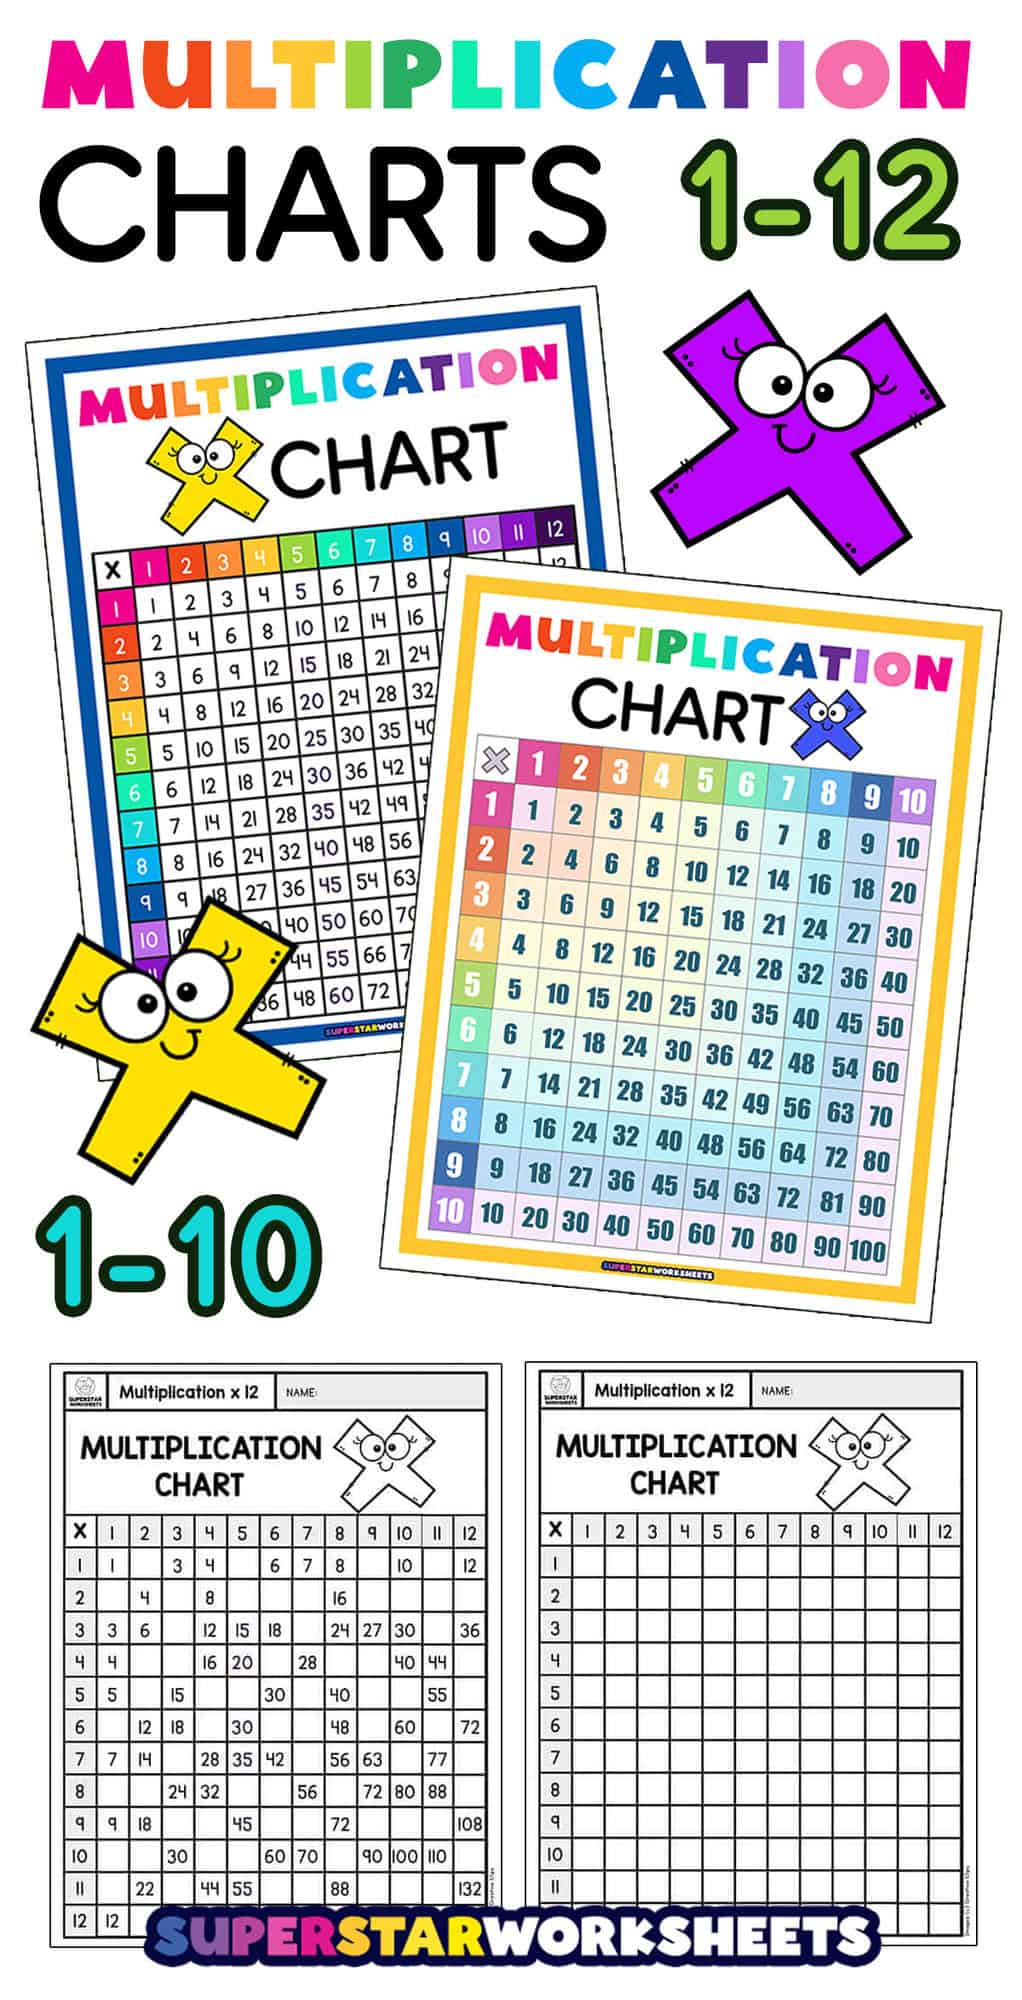 Multiplication Chart Superstar Worksheets 369 Hot Sex Picture 0926